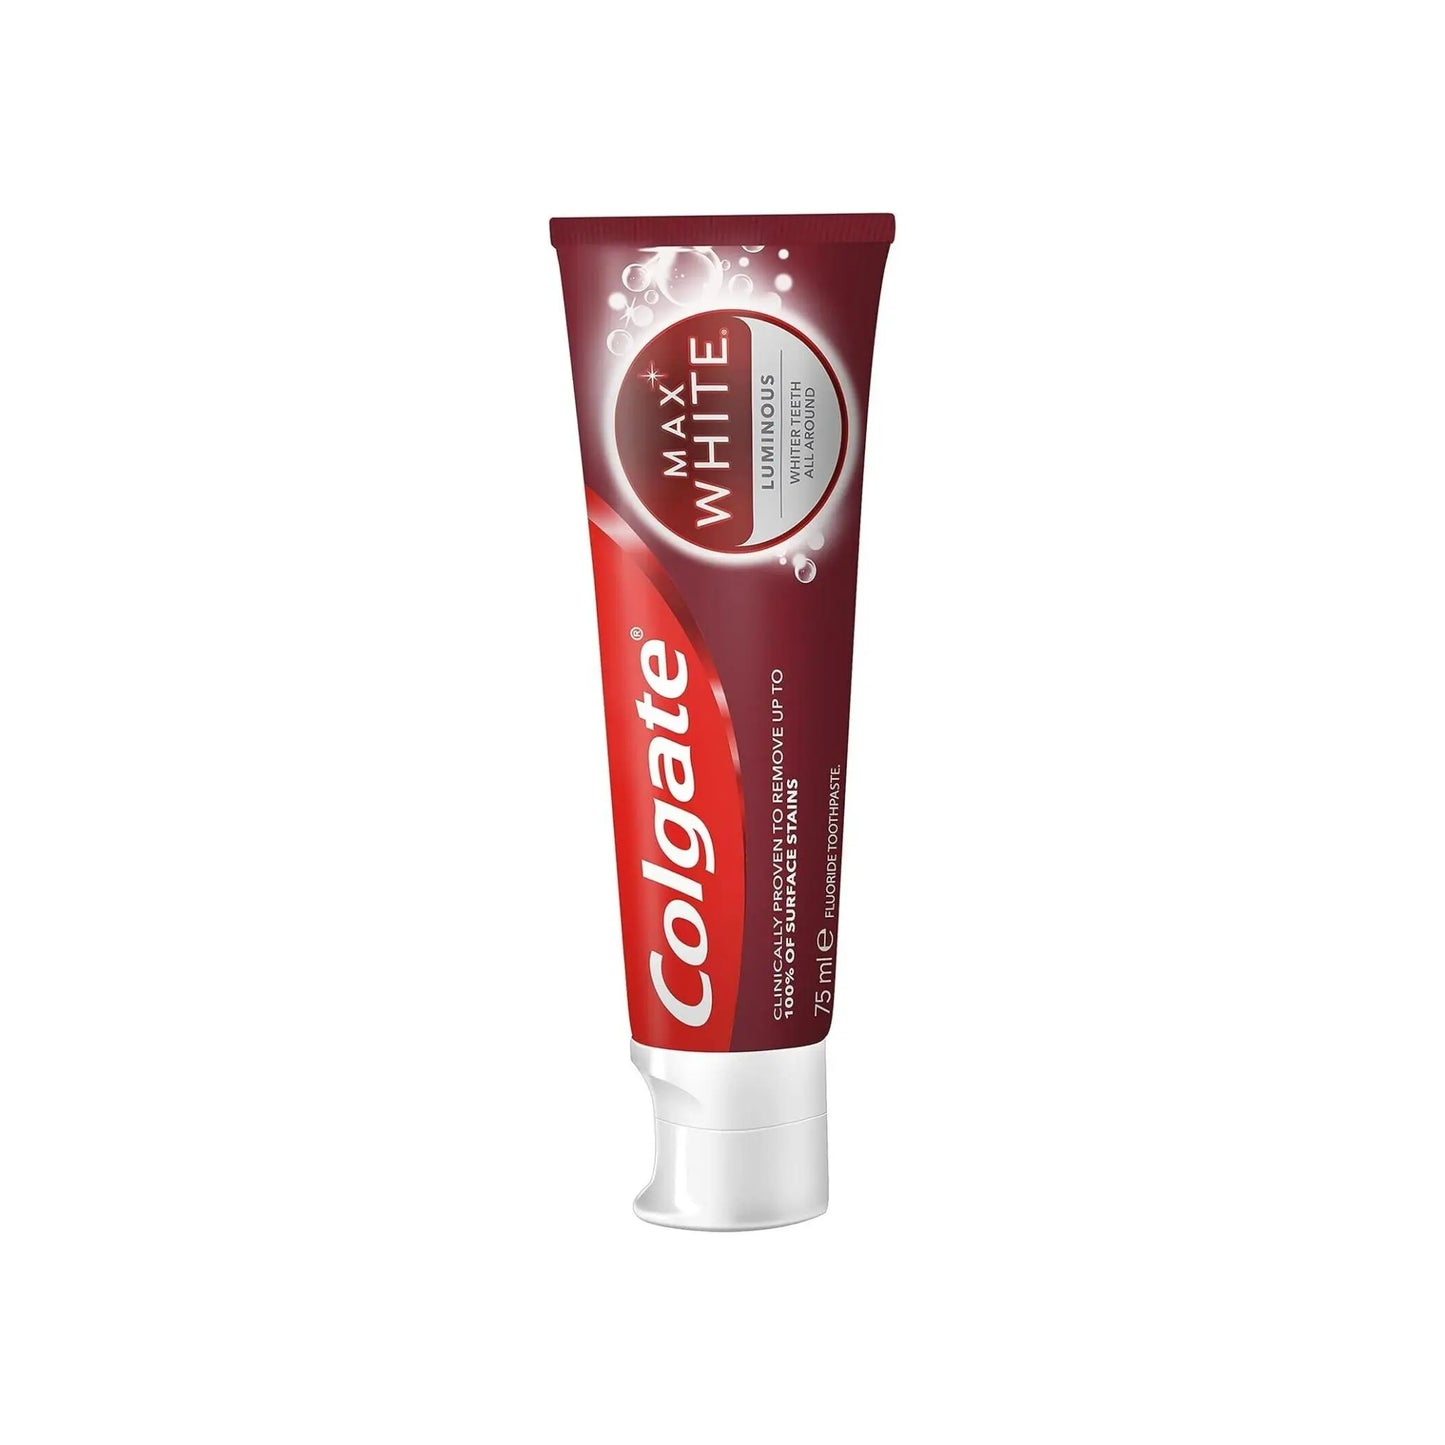 Colgate Max White Luminous Whitening Toothpaste, 75ml Colgate